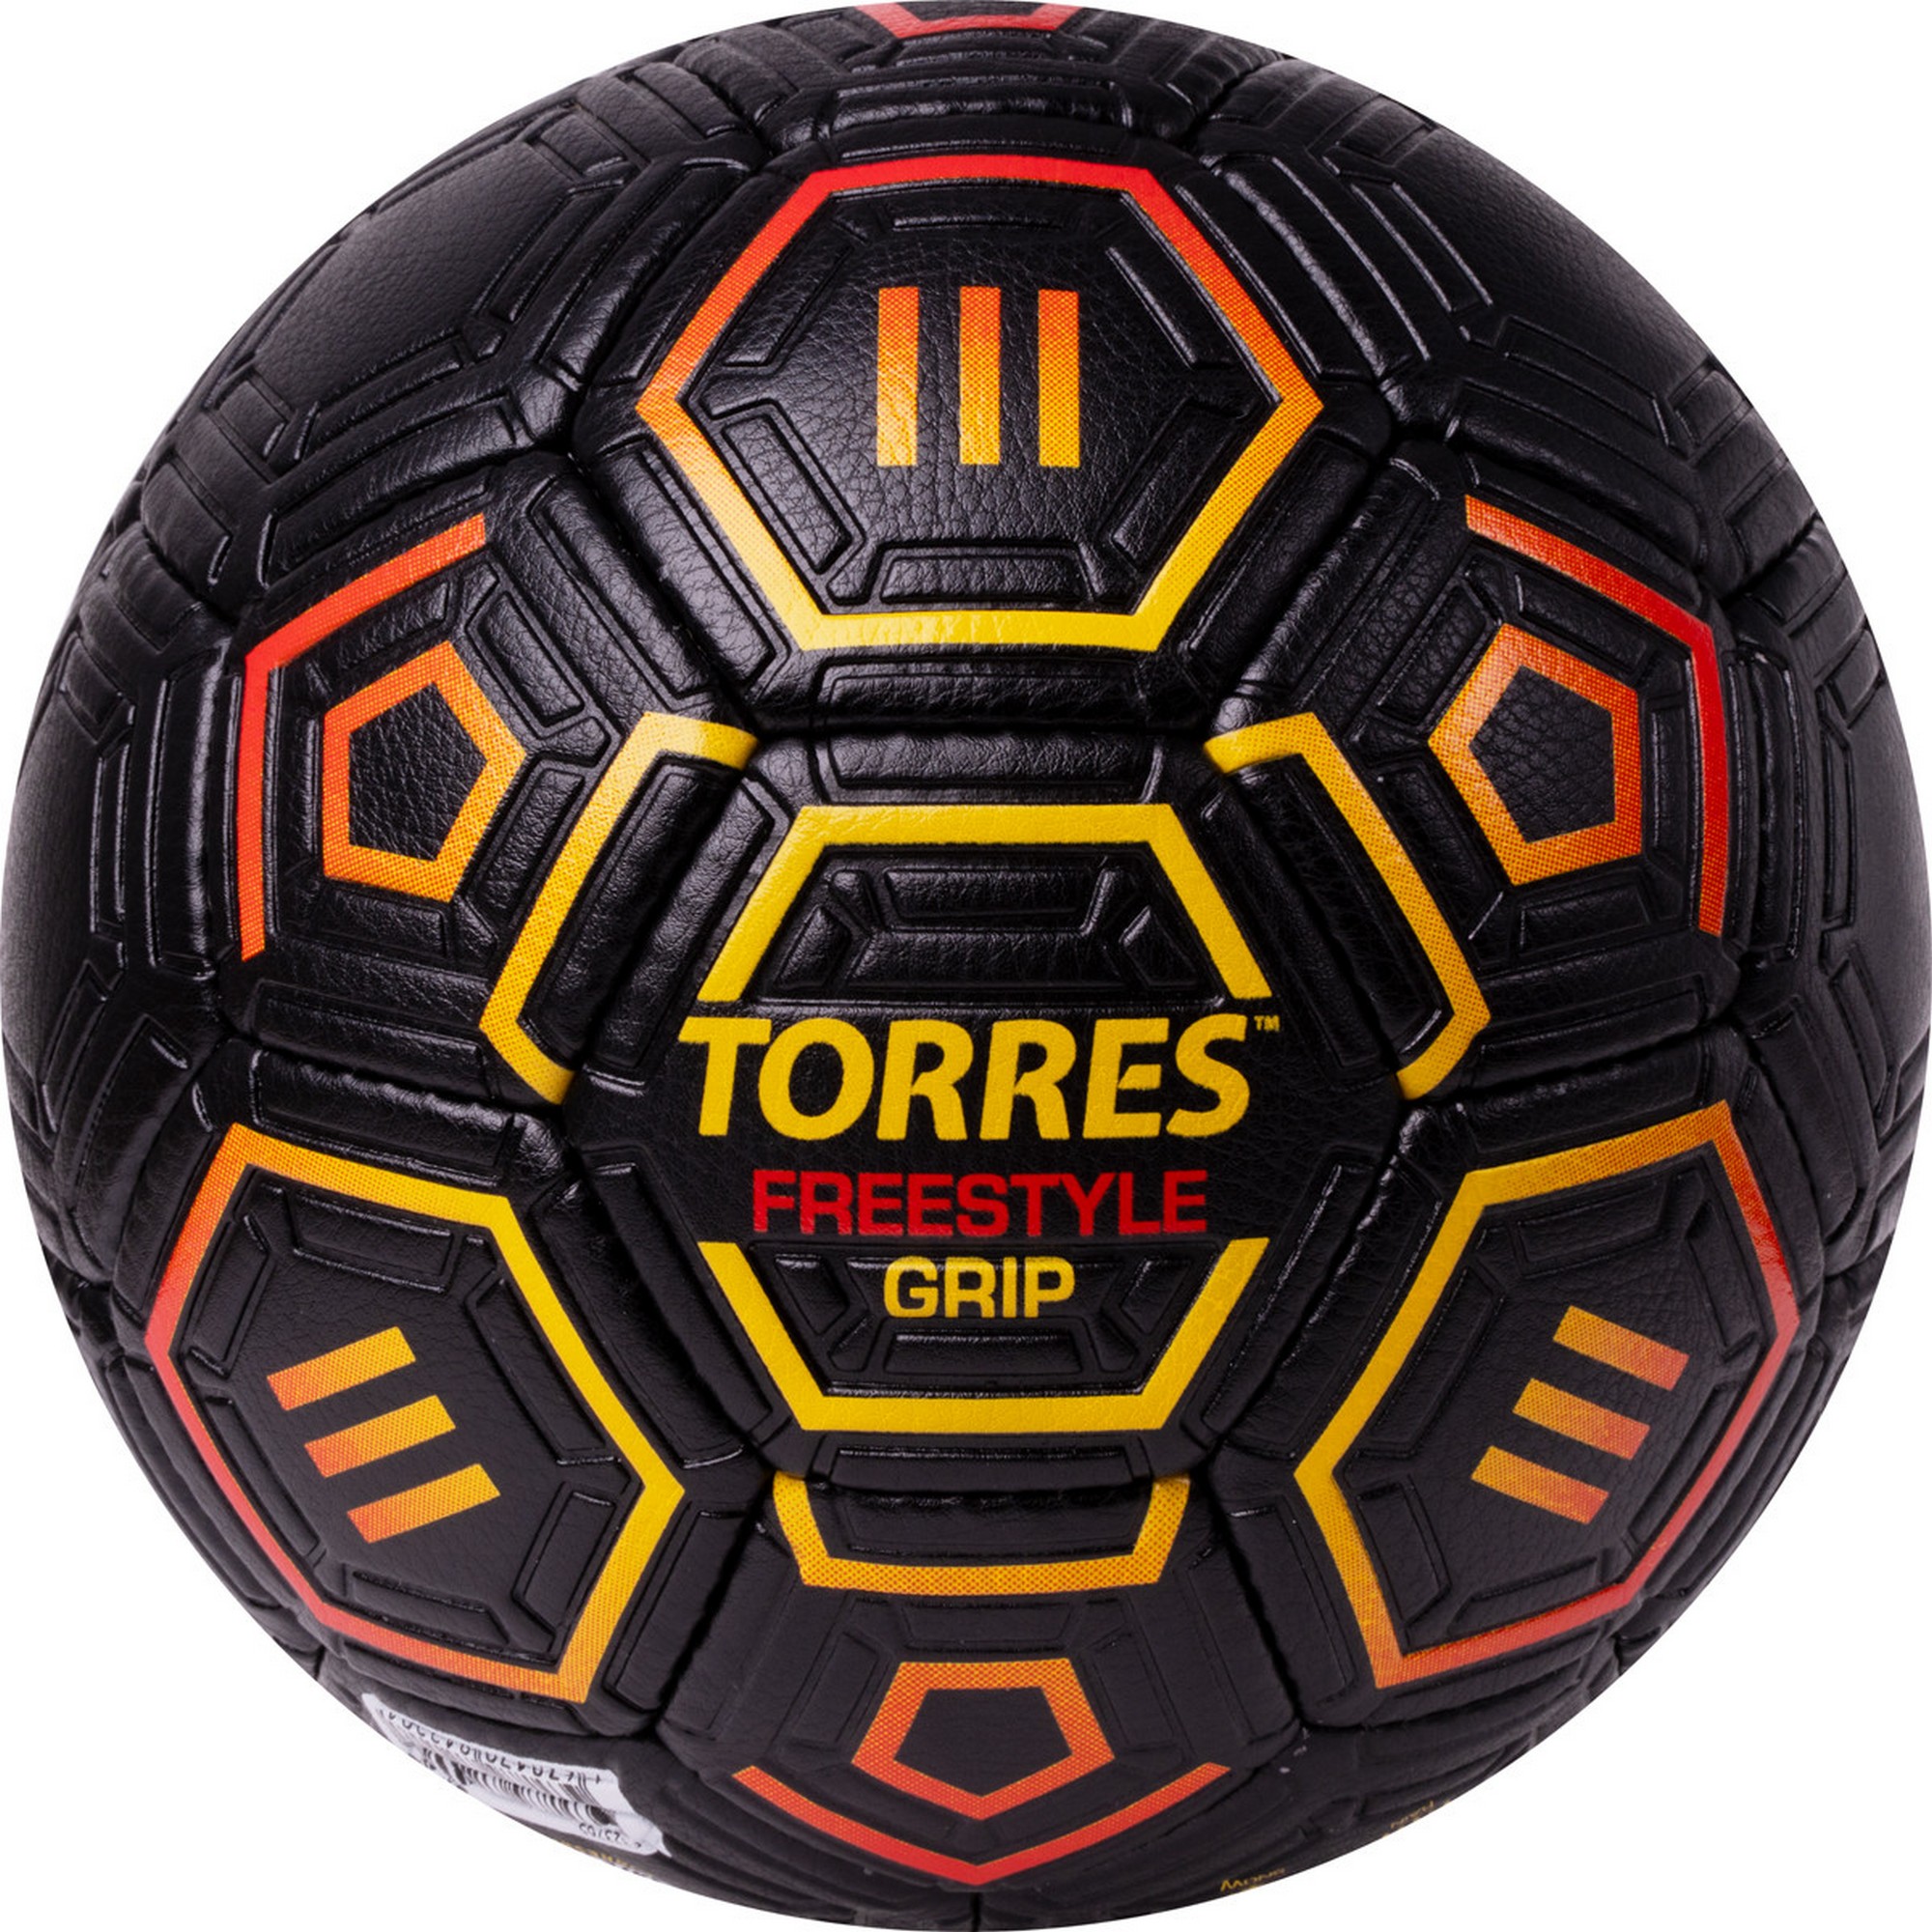   Torres Freestyle Grip F323765 .5